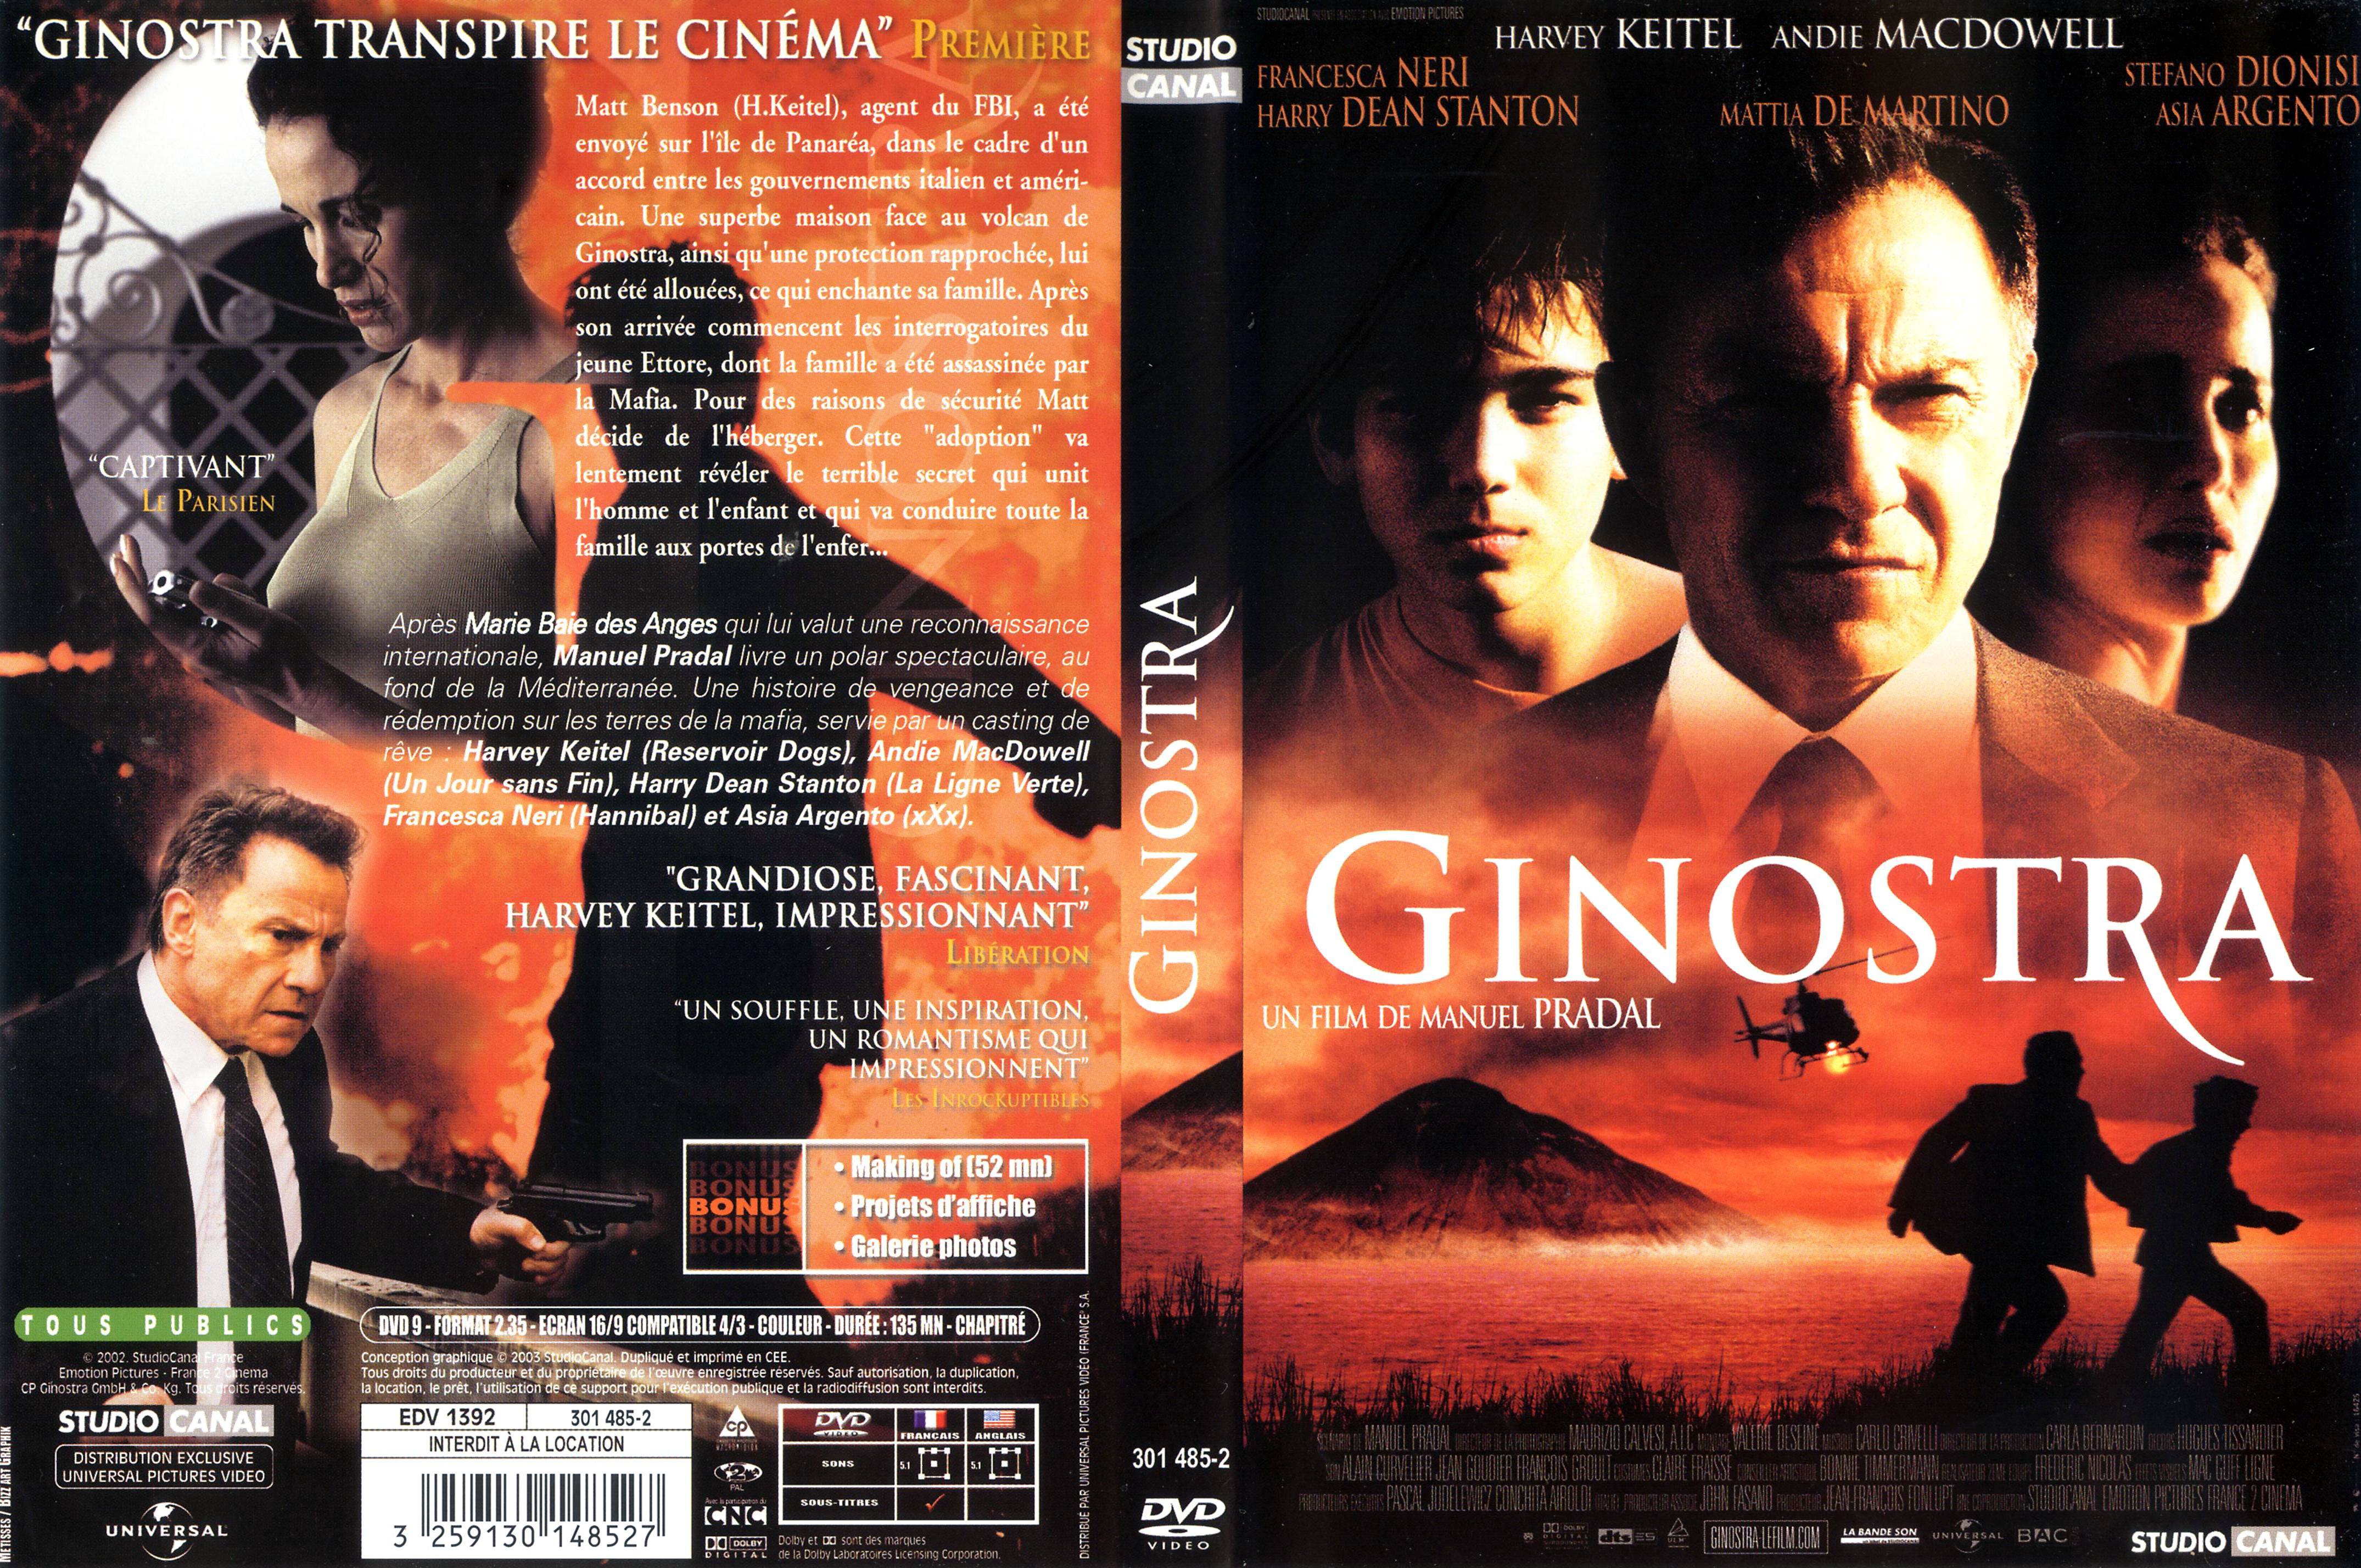 Jaquette DVD Ginostra